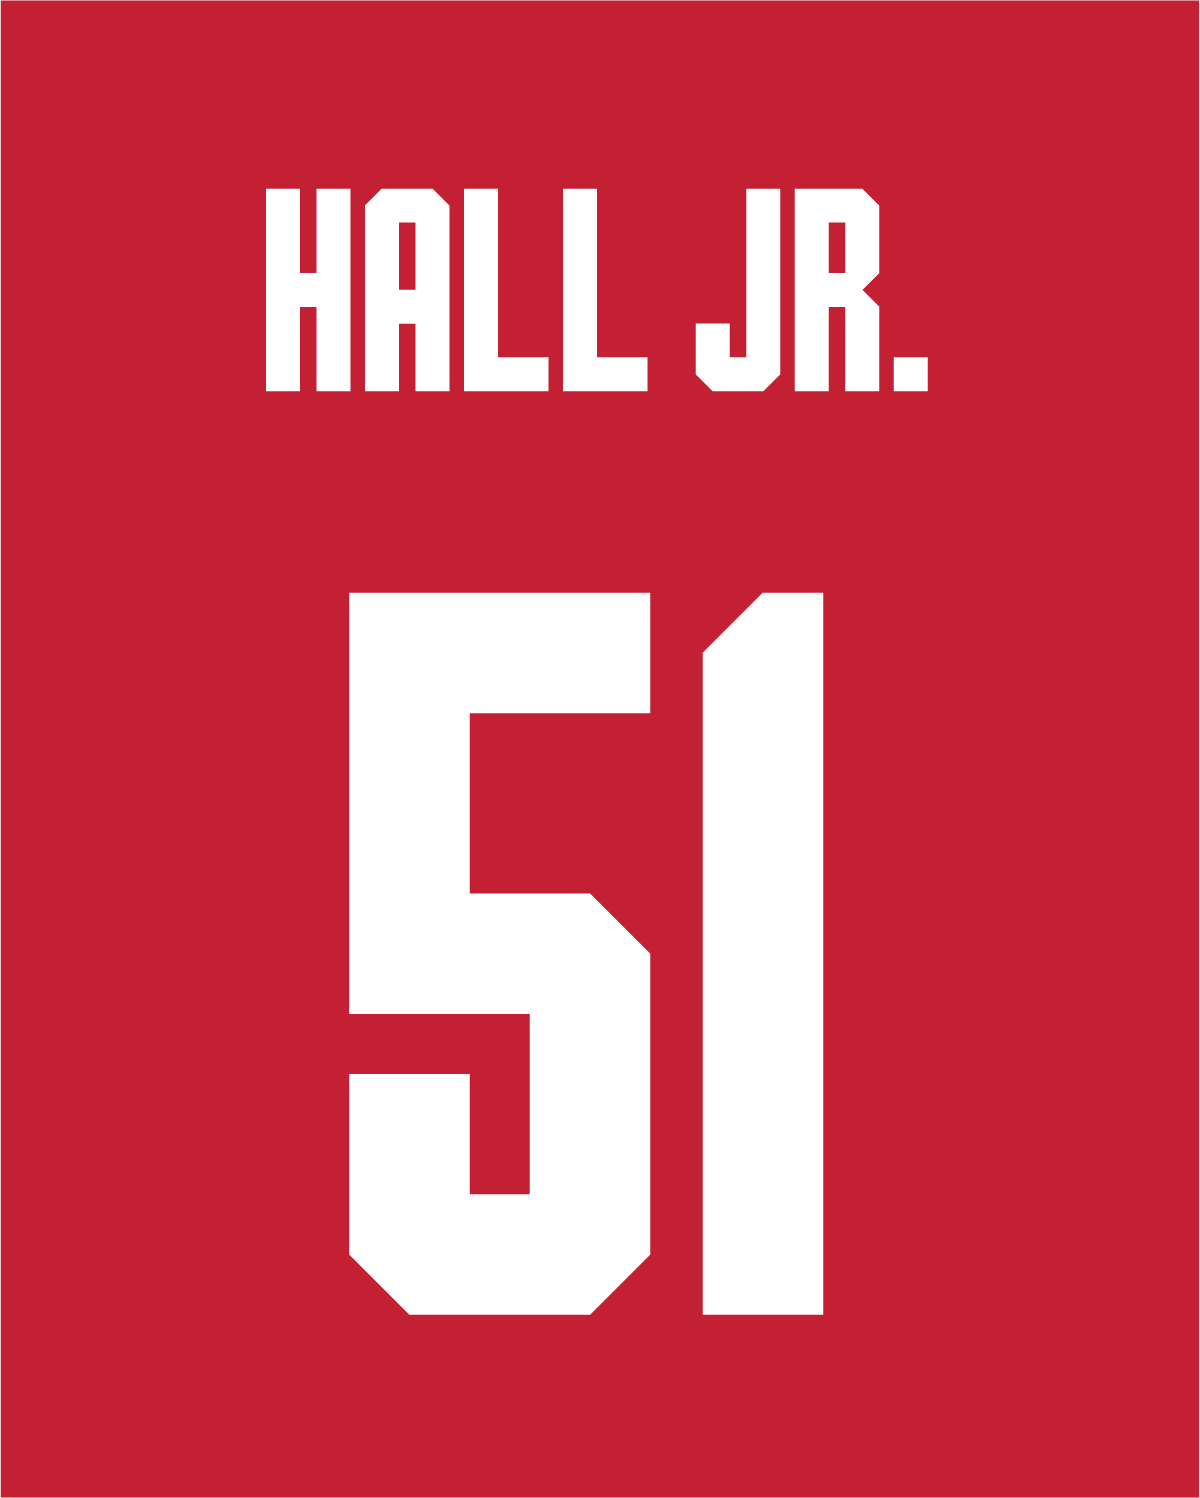 Michael Hall Jr. | #51